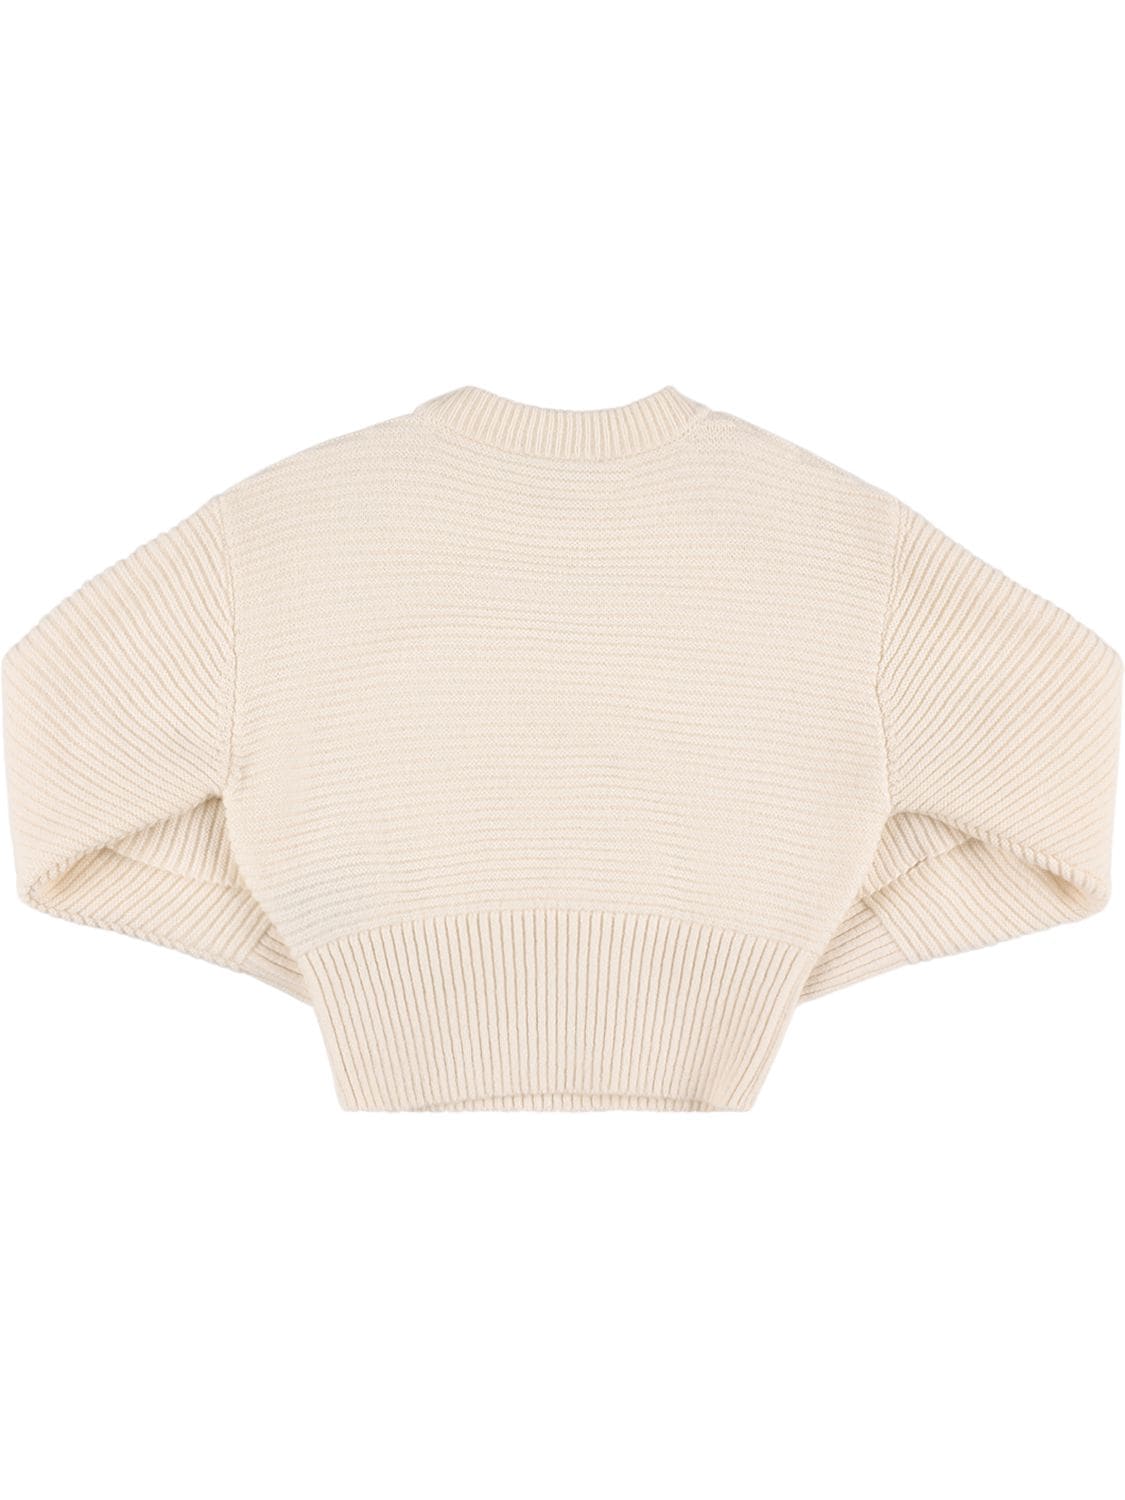 Shop Balmain Rib Knit Wool & Cashmere Sweater In Ivory